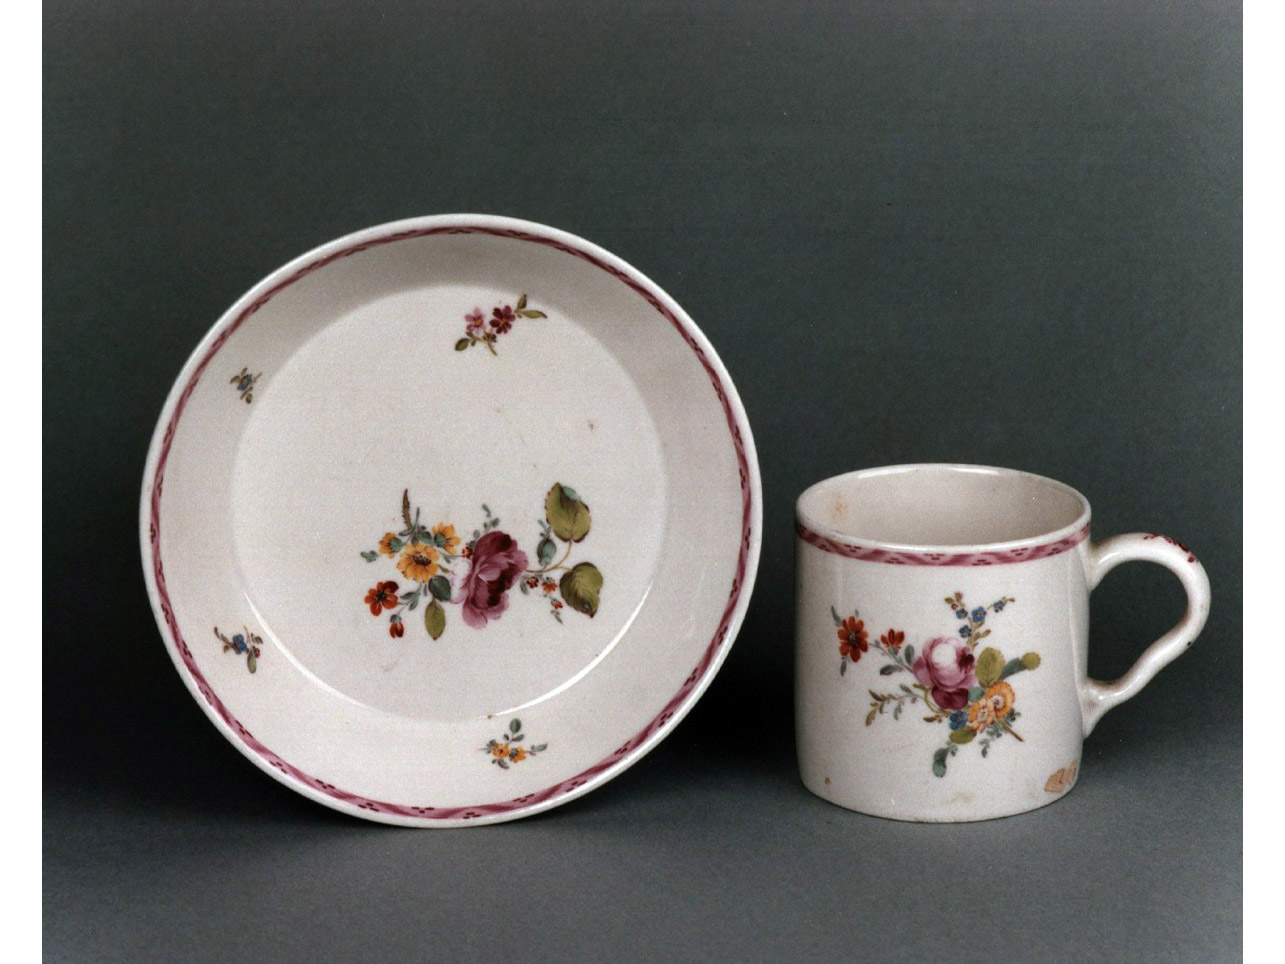 motivi decorativi floreali (tazza) - manifattura di Rauenstein (secc. XVIII/ XIX)